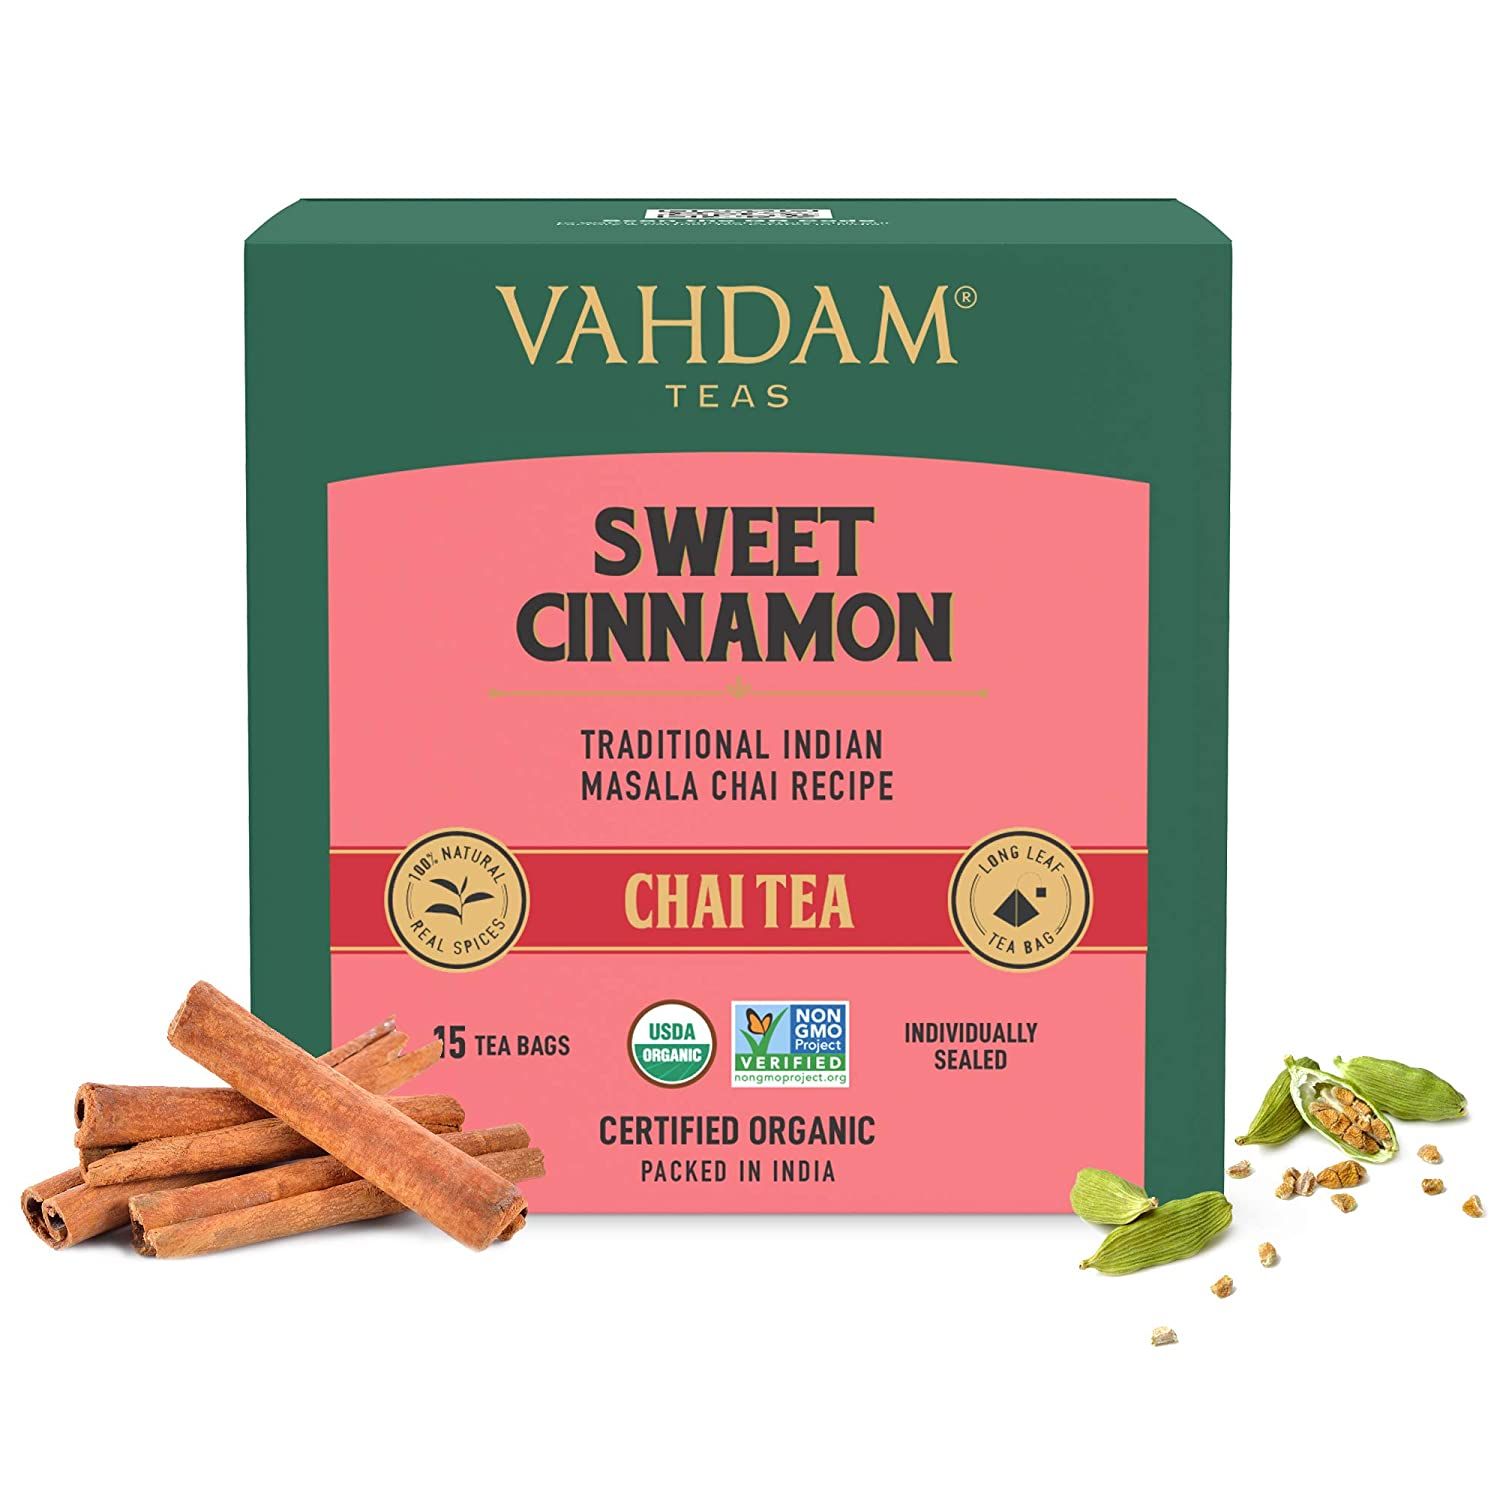 Vahdam Organic Sweet Cinnamon Masala Chai Image